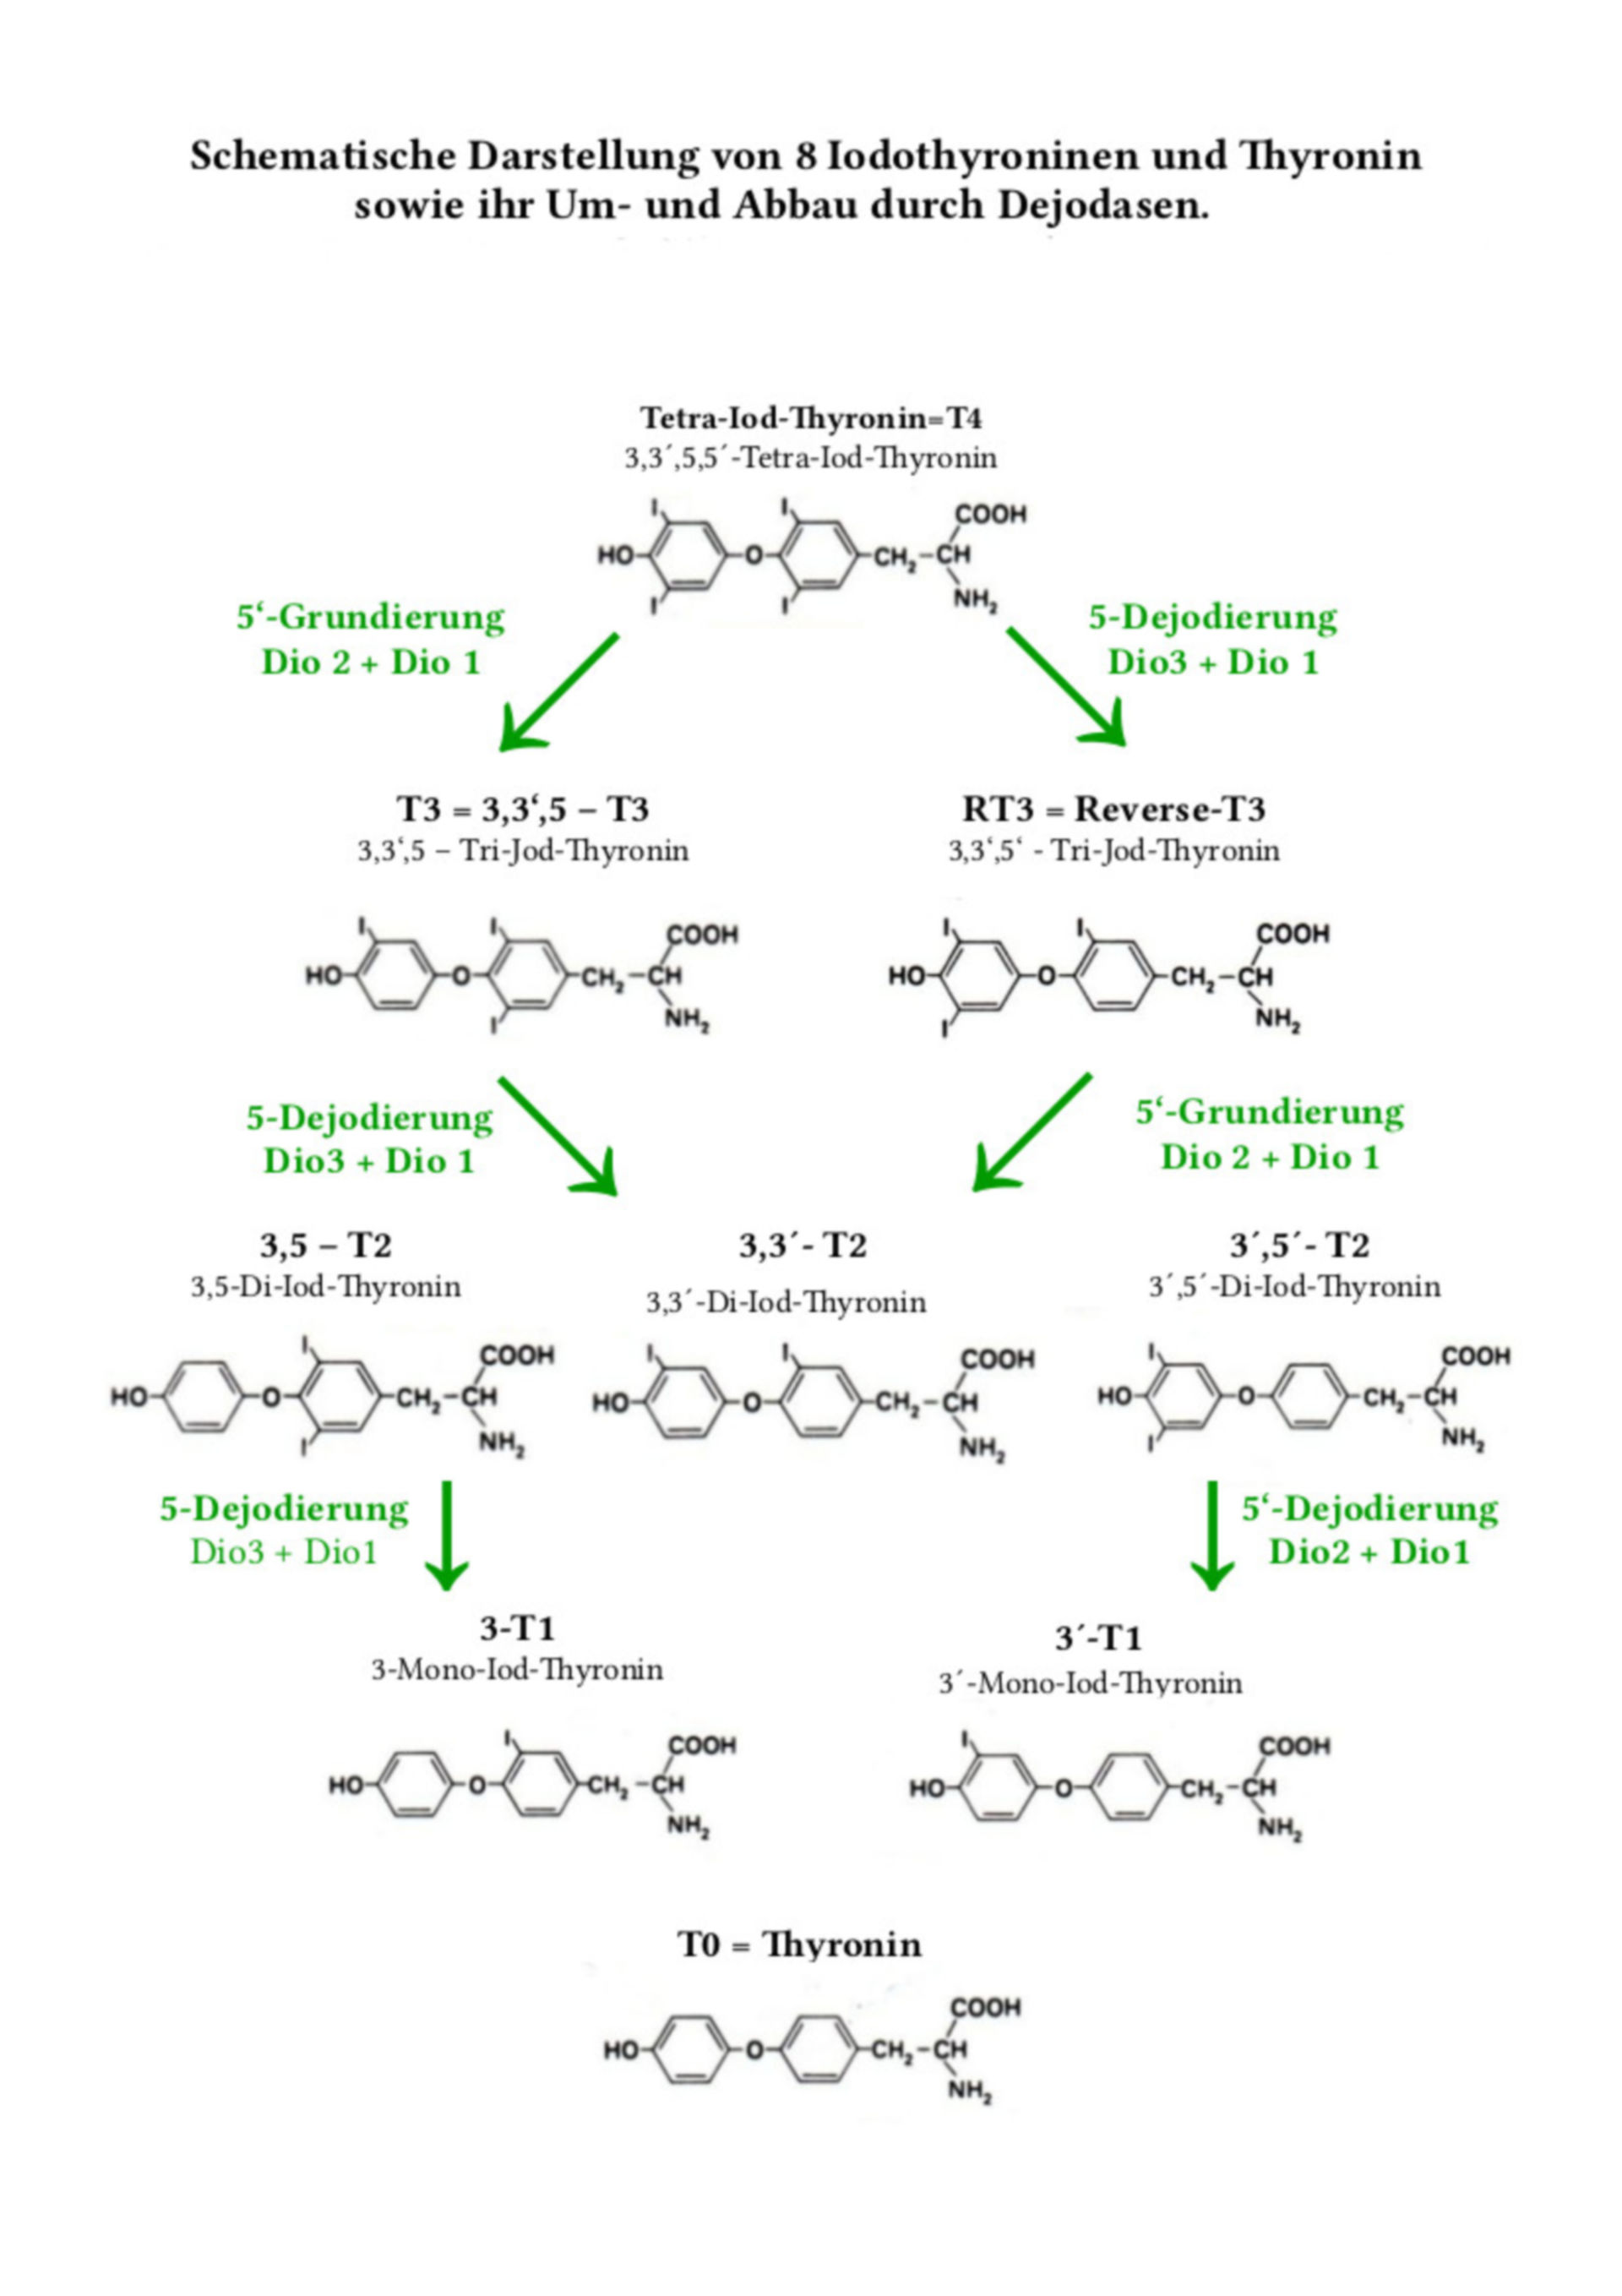 x4,1 Jodothyronine + Thyronin, Dejodasen